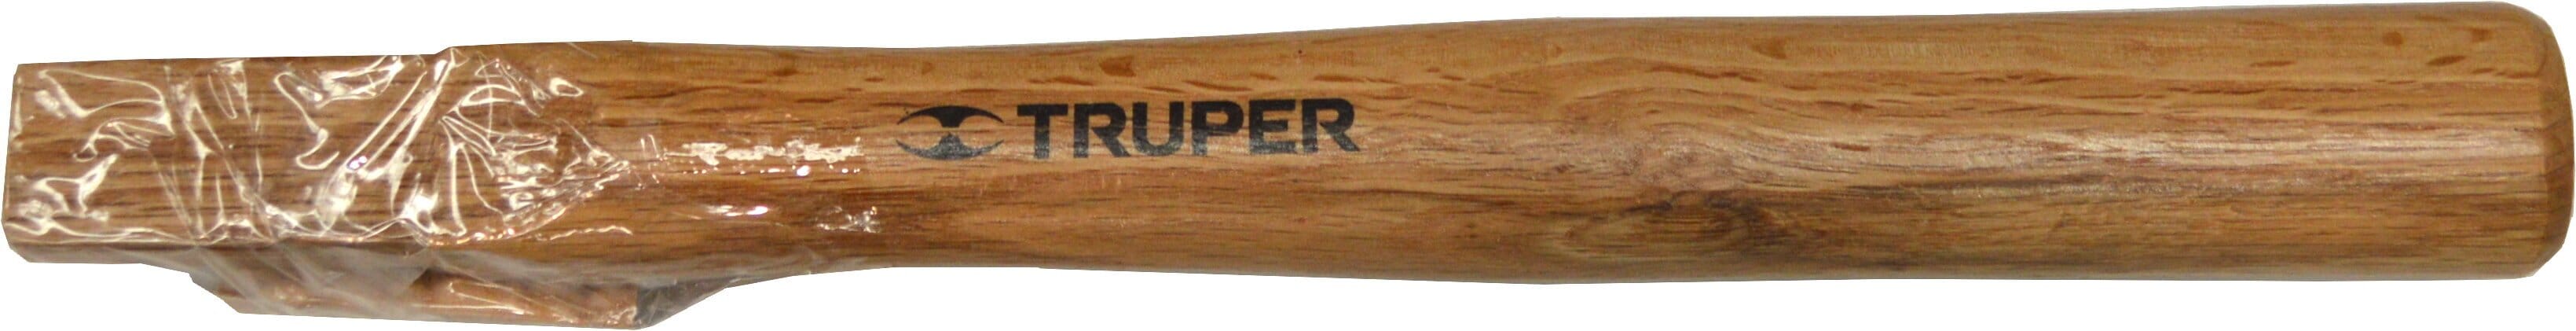 Truper Adze Eye Hammer Handle - Hickory 350mm